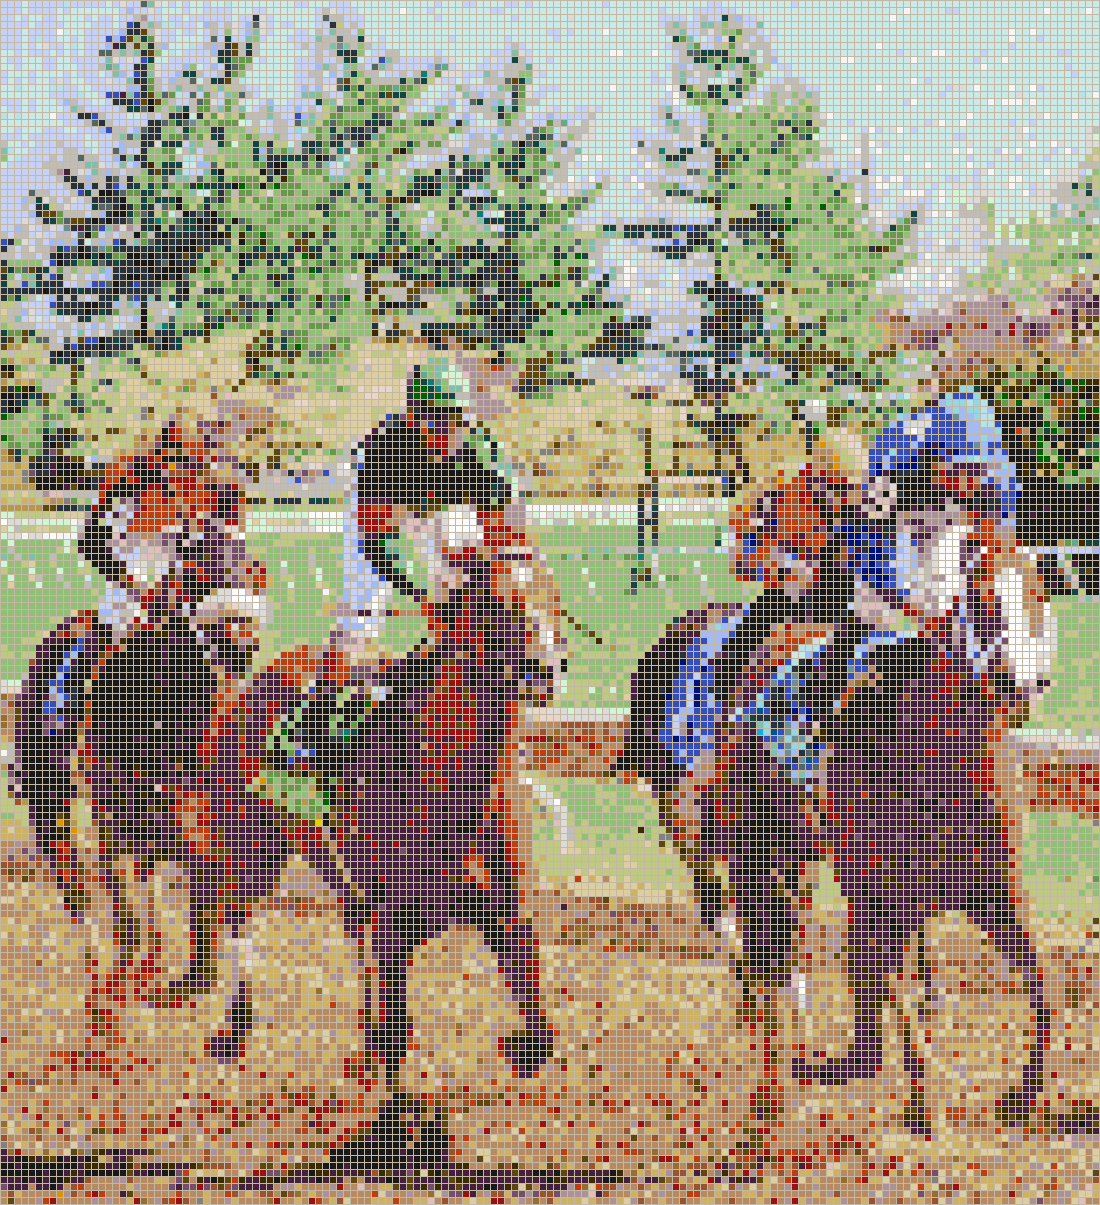 Horse Racing (Keeneland Race Track) - Mosaic Tile Art